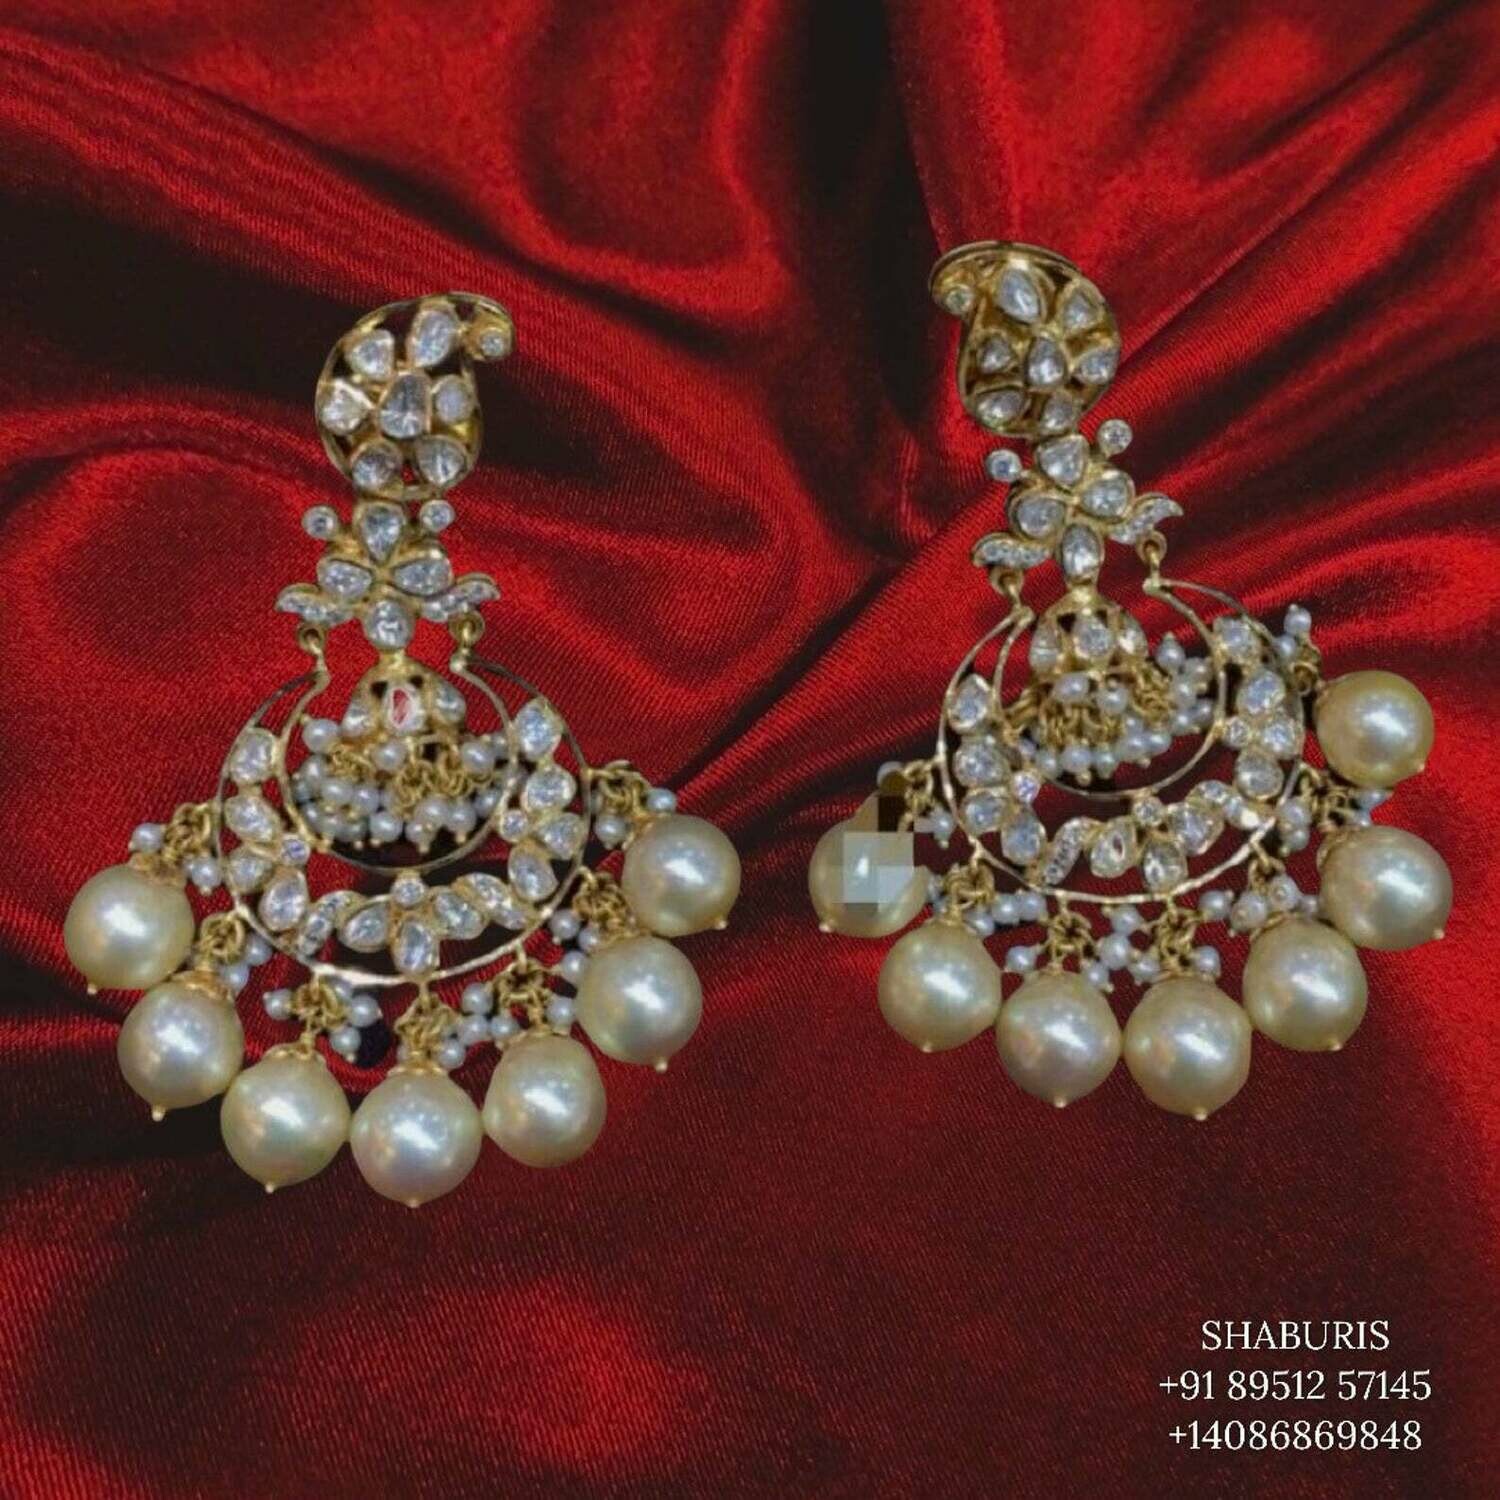 Polki necklace,diamond jewelry,pure silver jewelry, lyte weight earrings gold jewelry designs diamond earrings